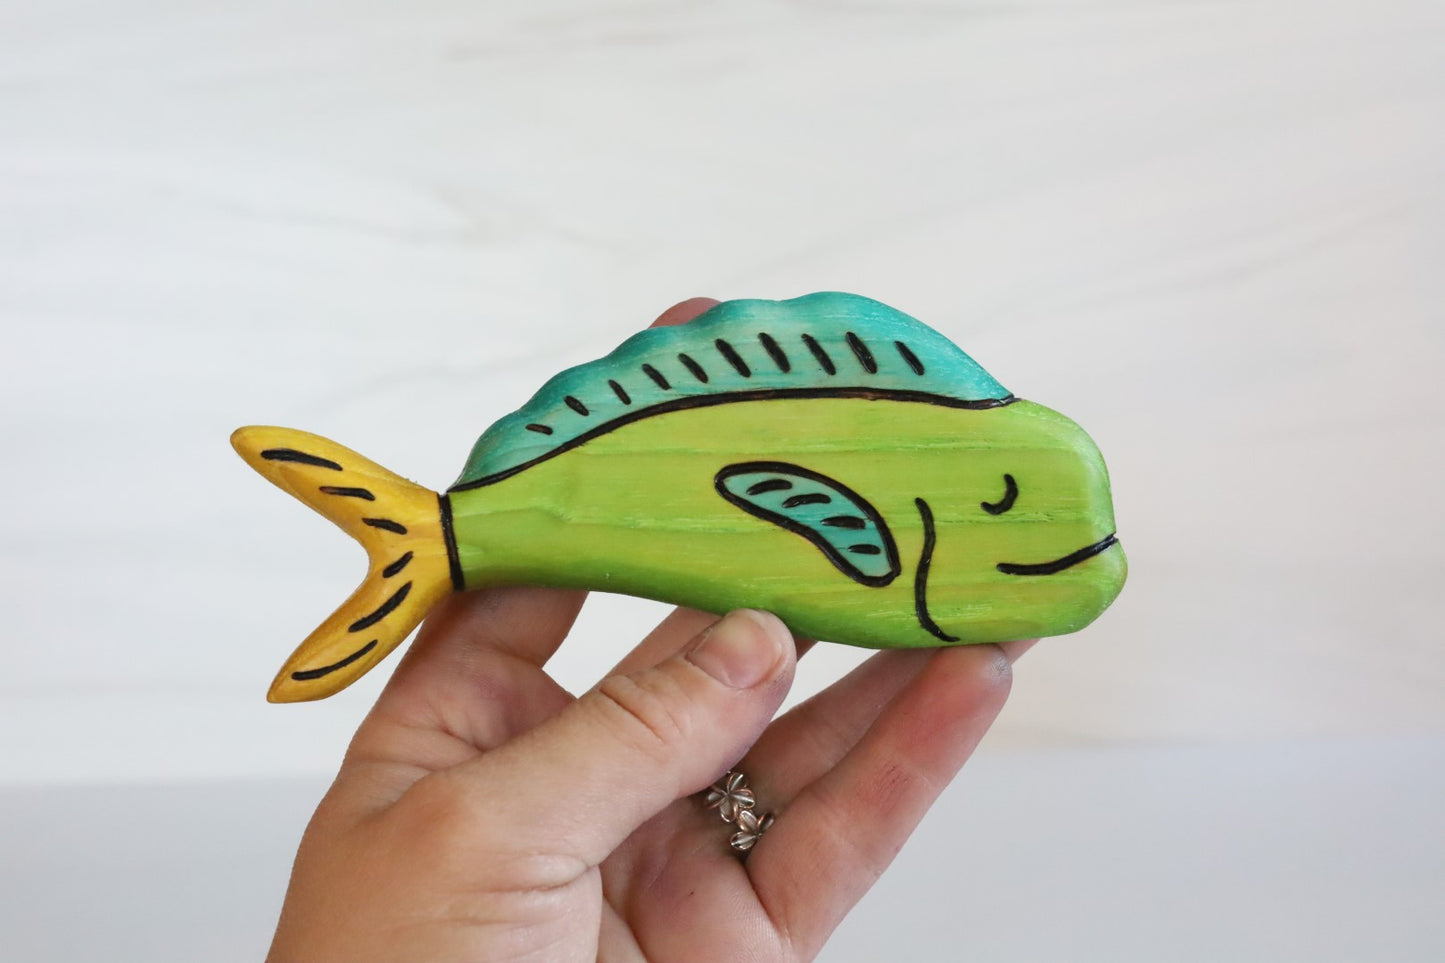 Wooden Mahi Mahi Tropical Fish Toy